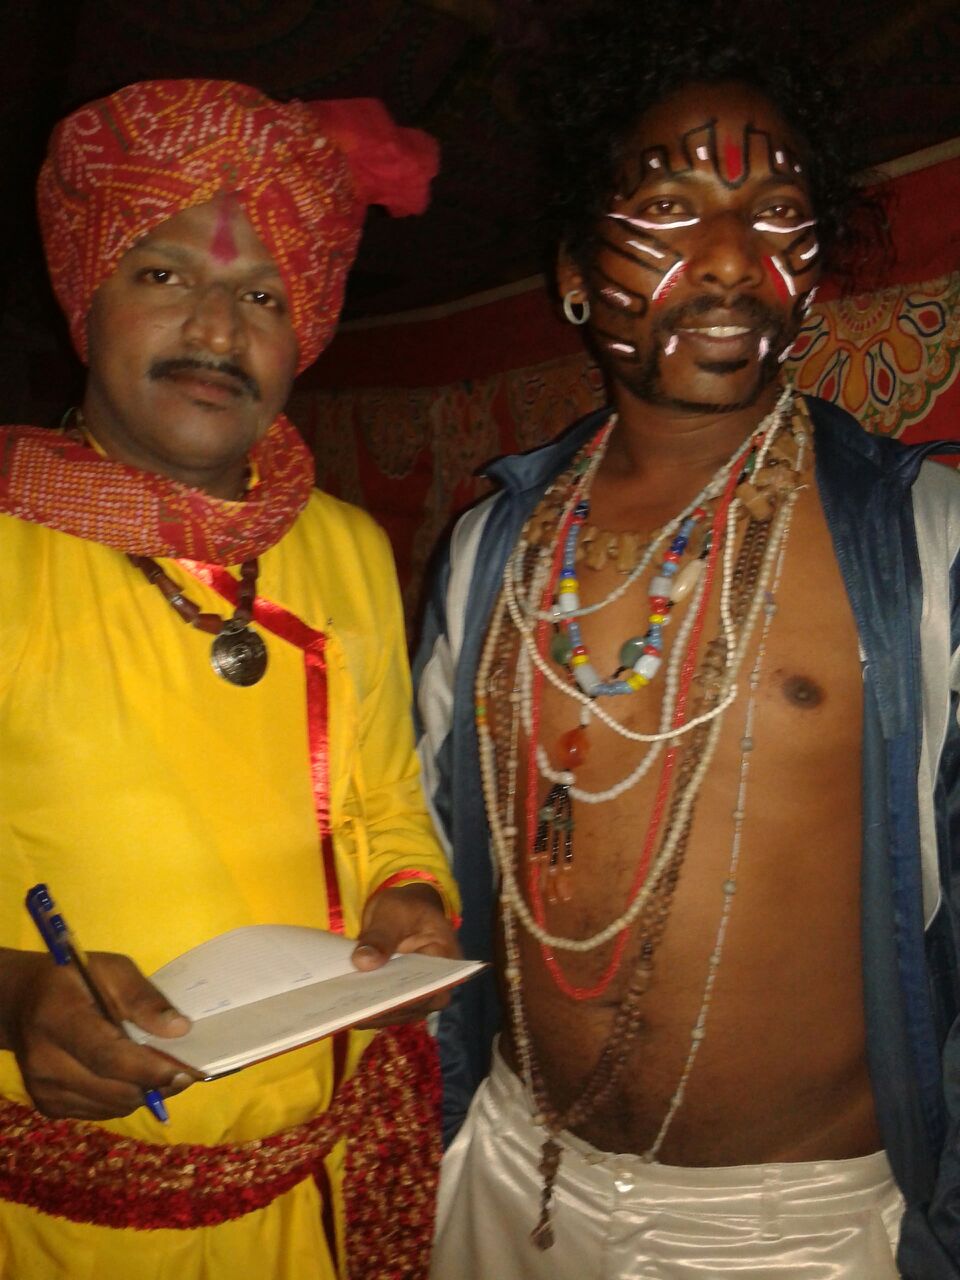 Kosali artist during Nabarangpur Mondei festival 2014 at Odisha